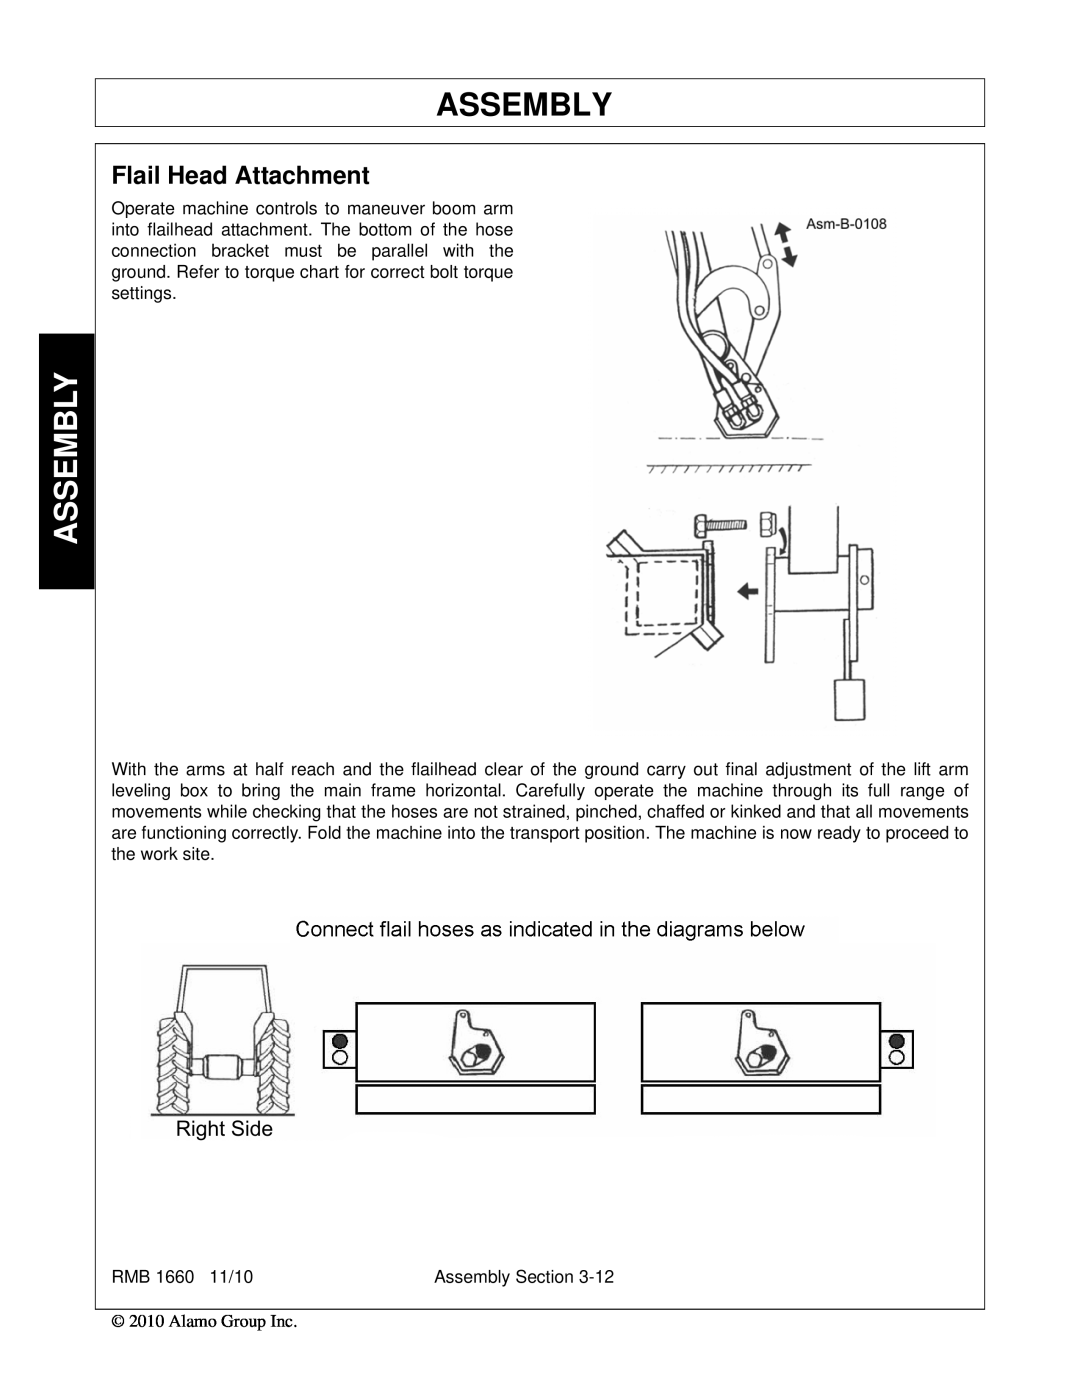 Bush Hog RMB 1660 manual Assembly, Flail Head Attachment 